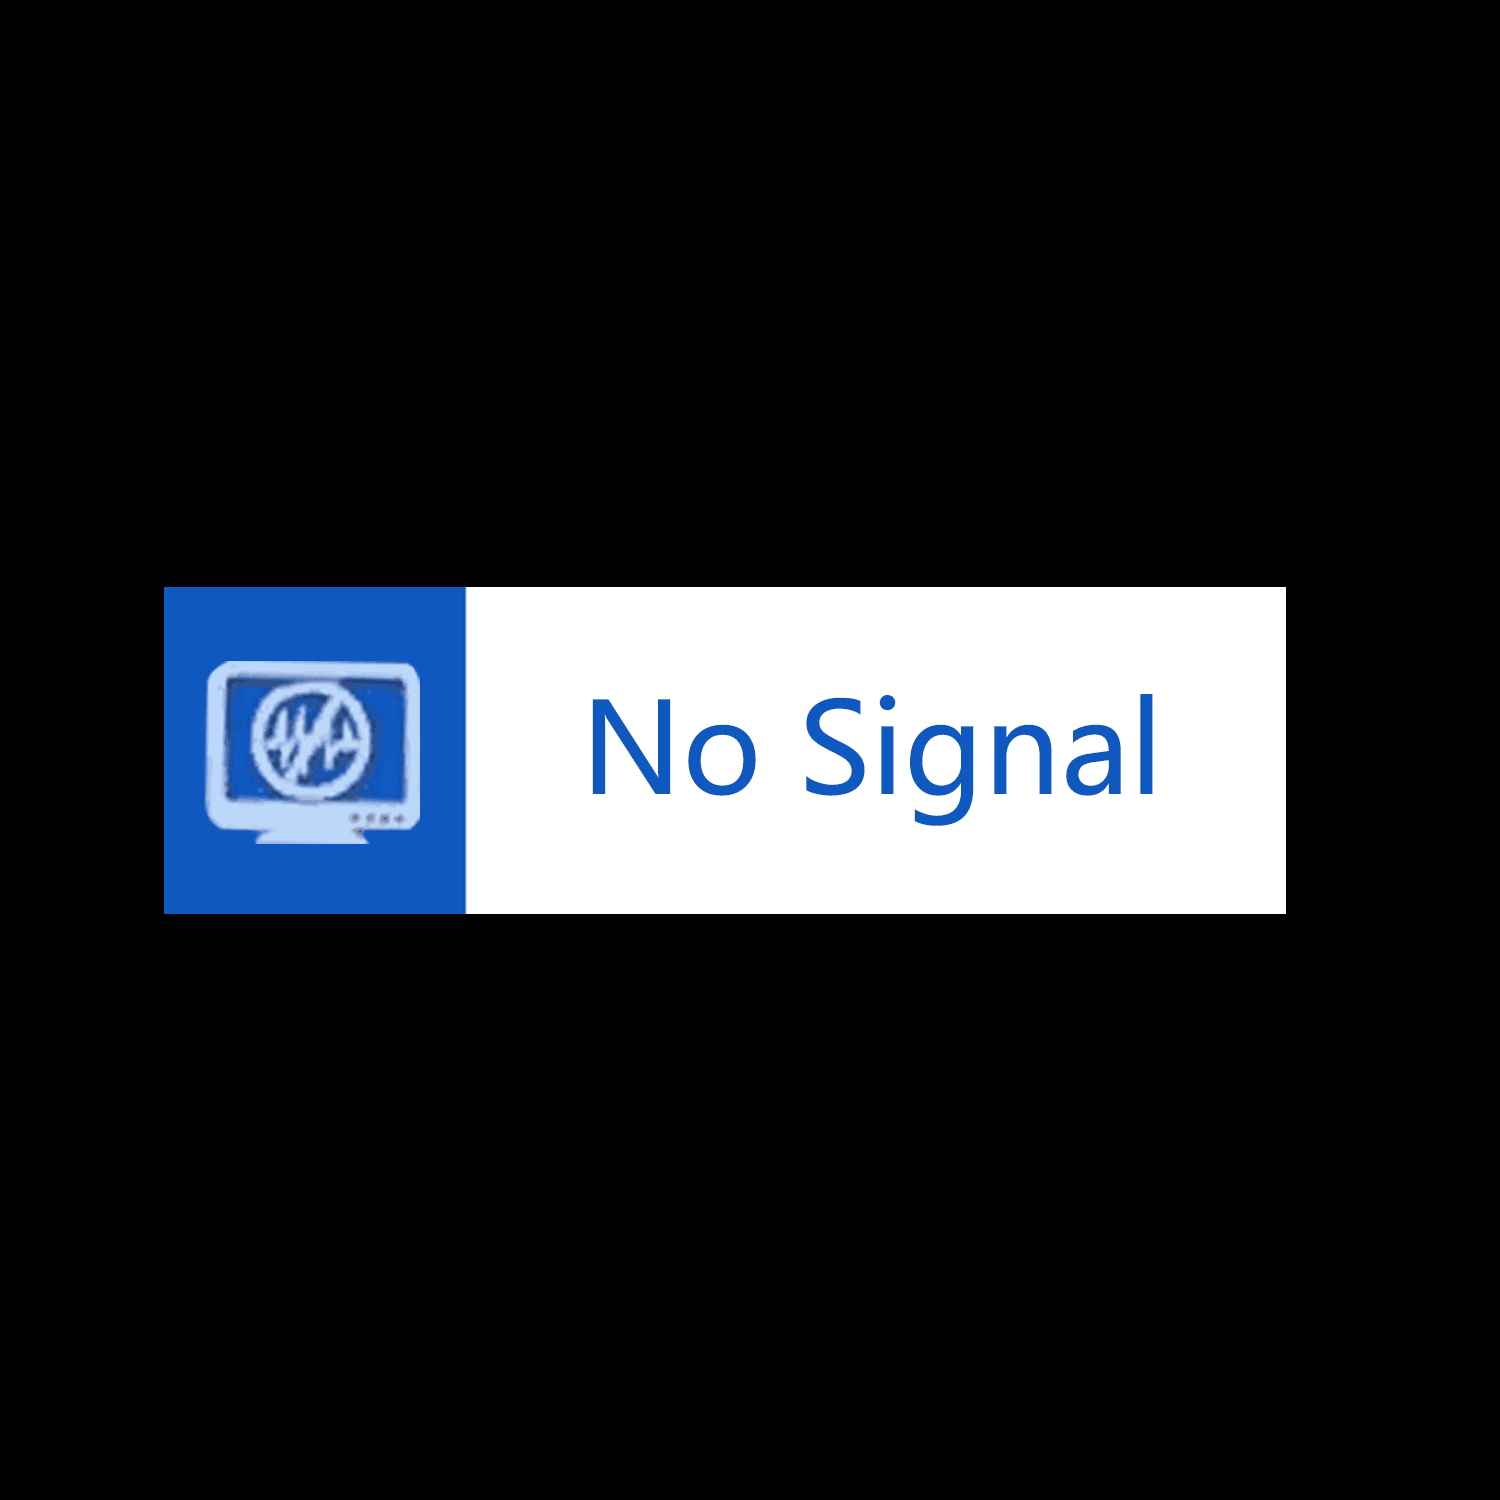 PD1560 Display Shows GAOMON Logo,  ‘No Signal’ , Enter ‘Power Saving’ , Then Darkens.